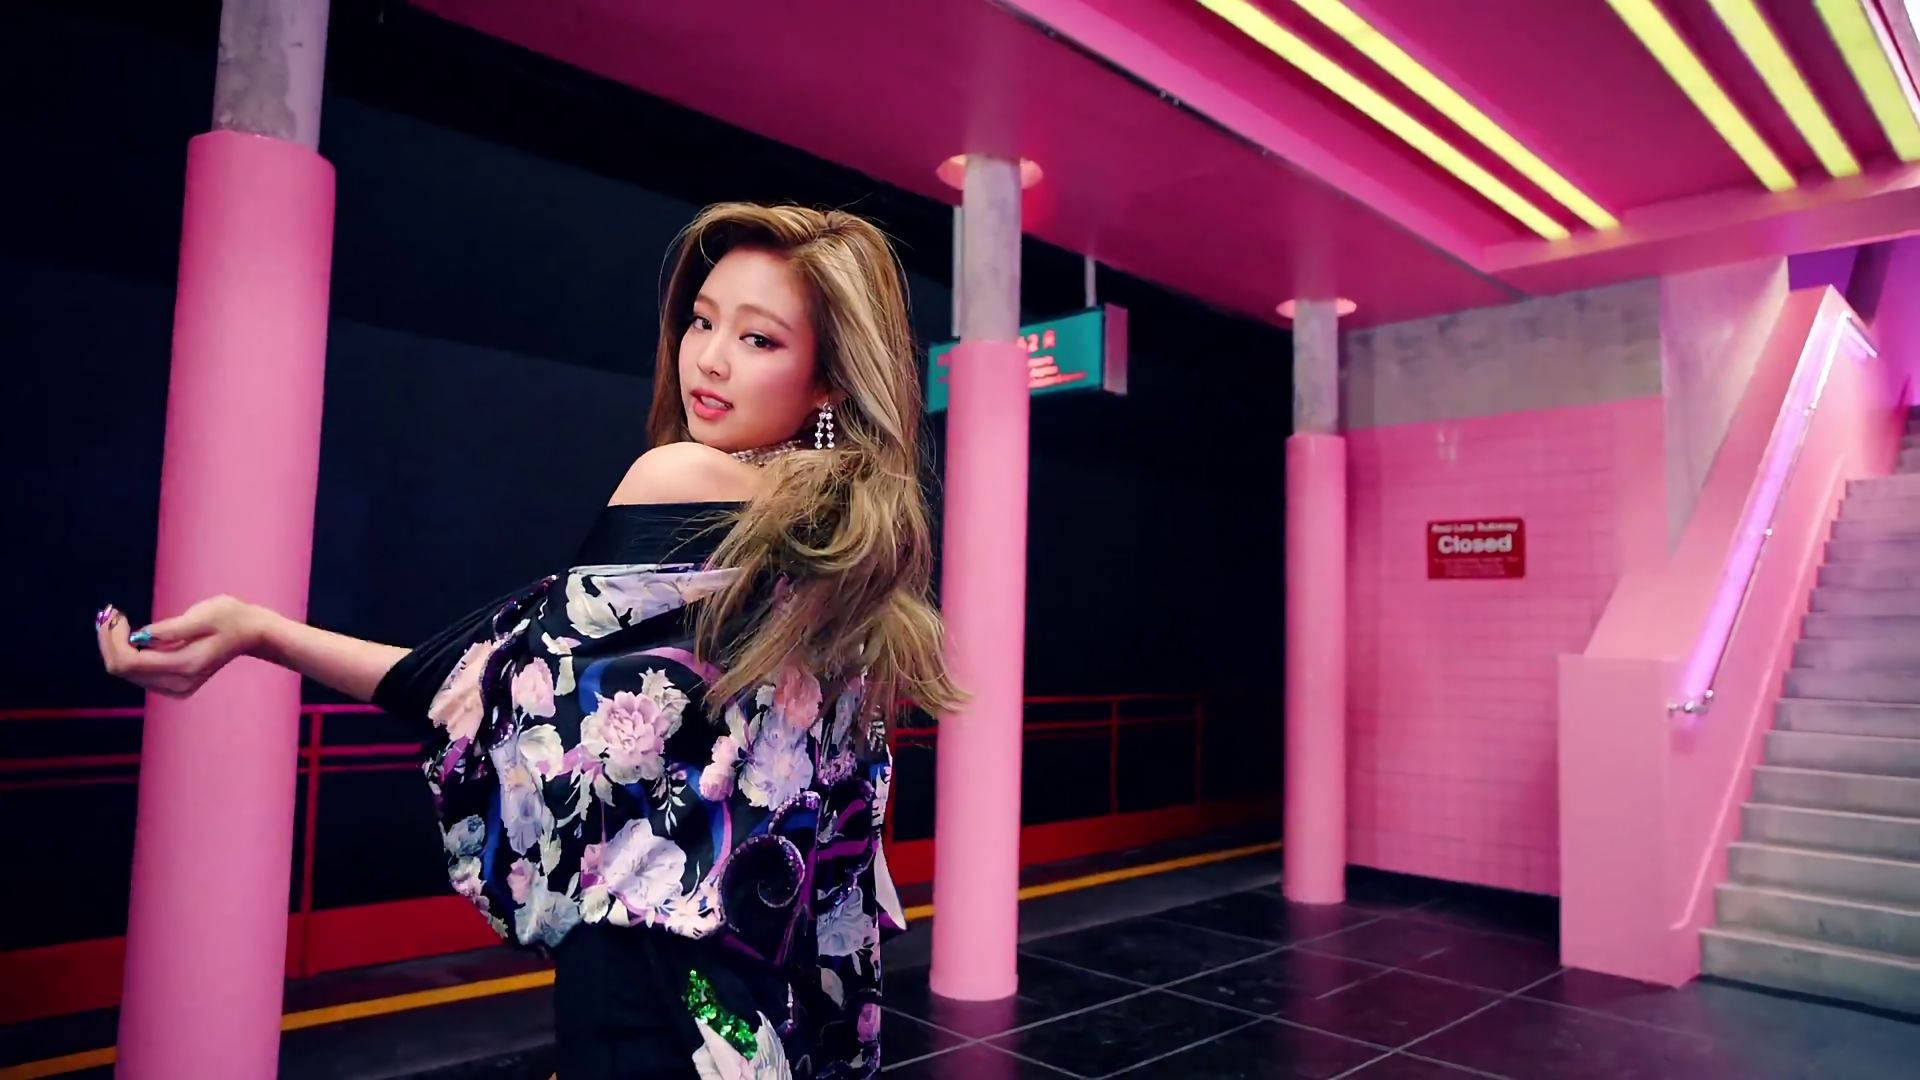 Gorgeous Jennie Kim In Pink Hall Wallpaper